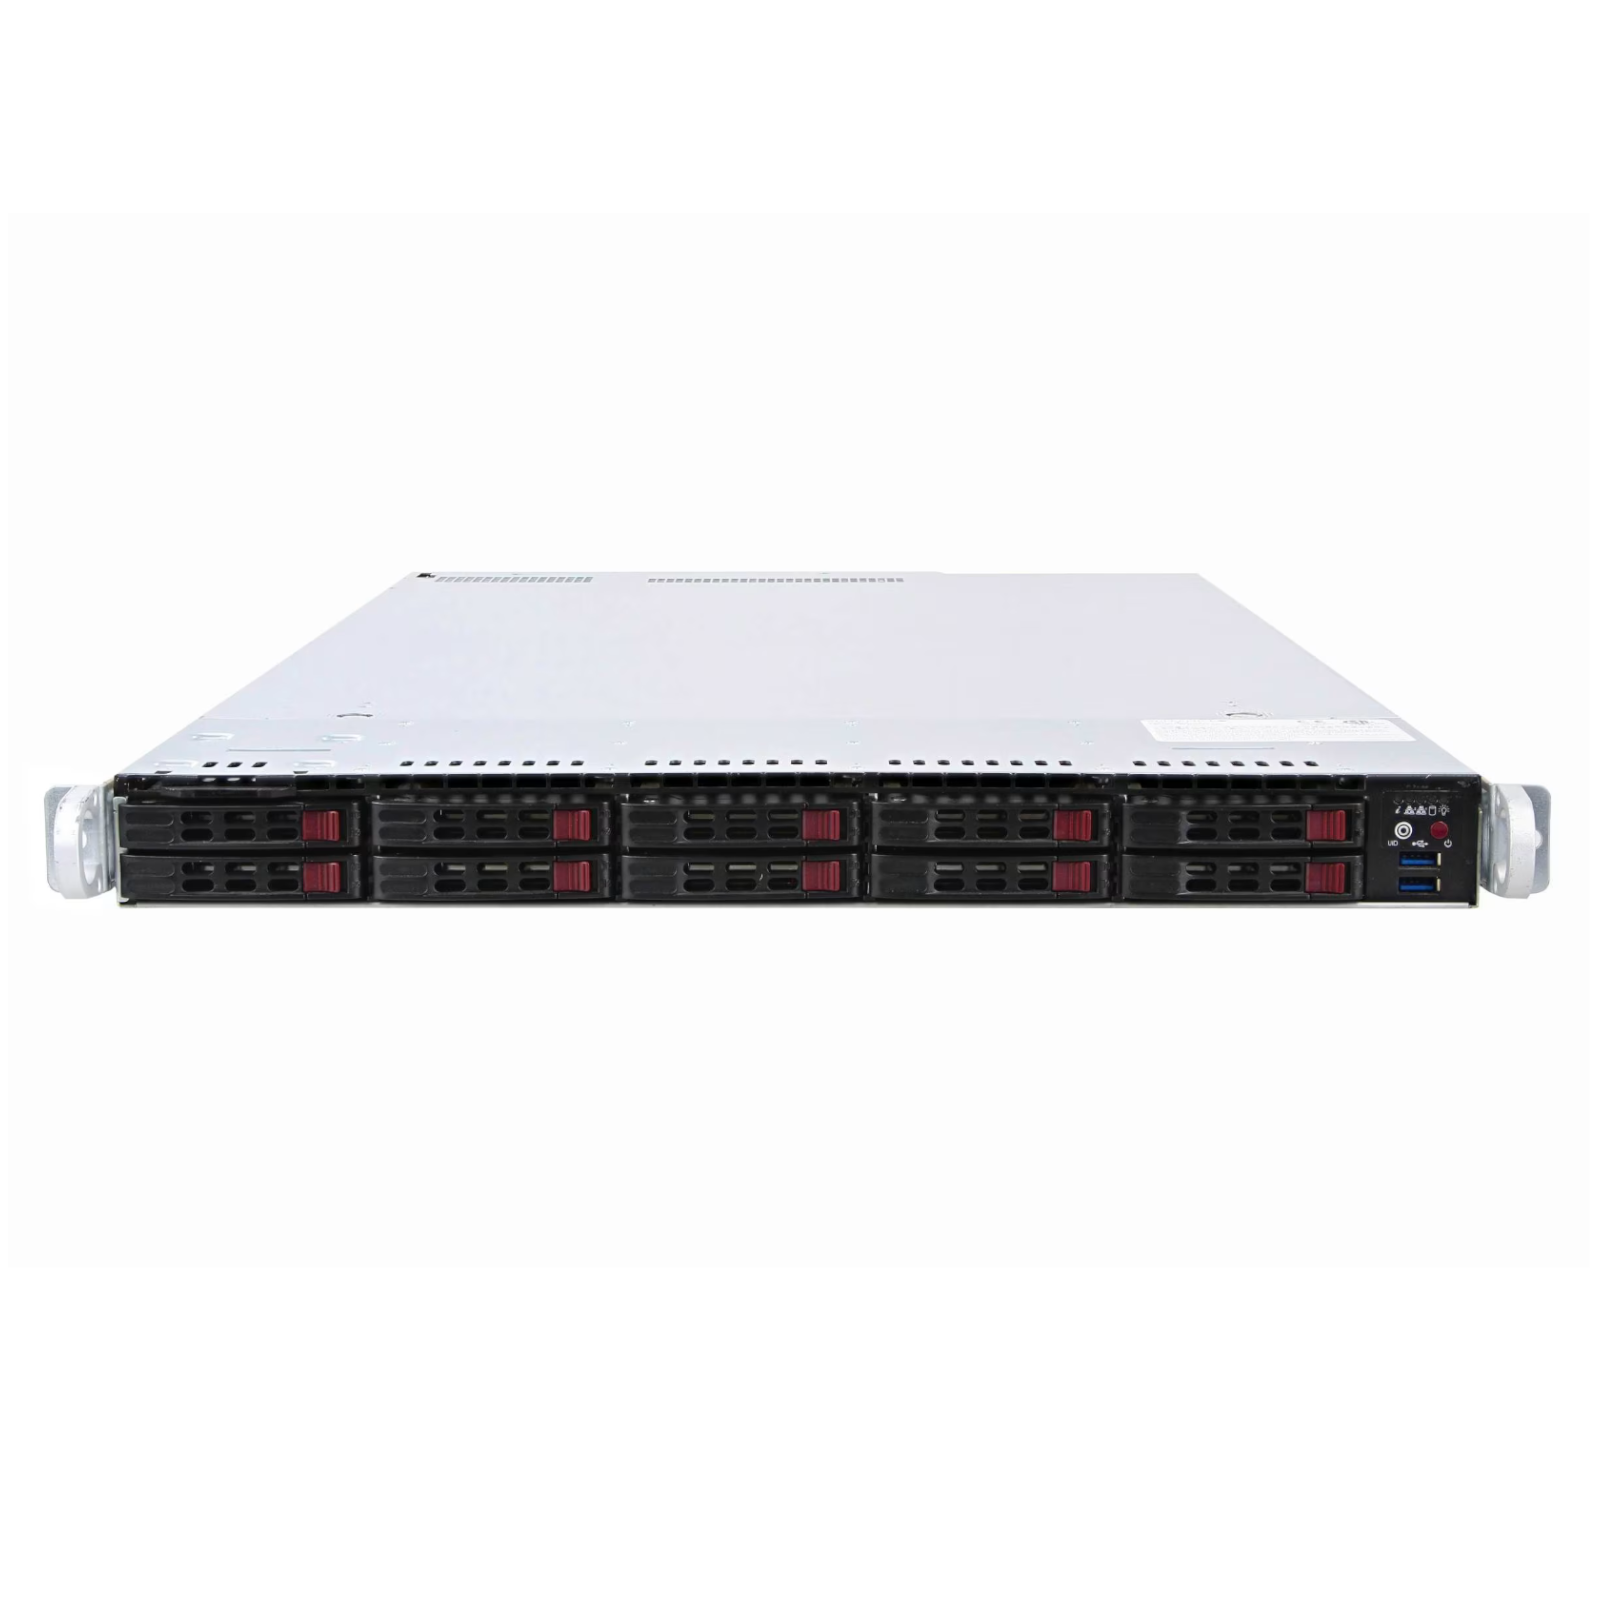 SuperMicro CSE-119U X11DPU 1U Rack Server